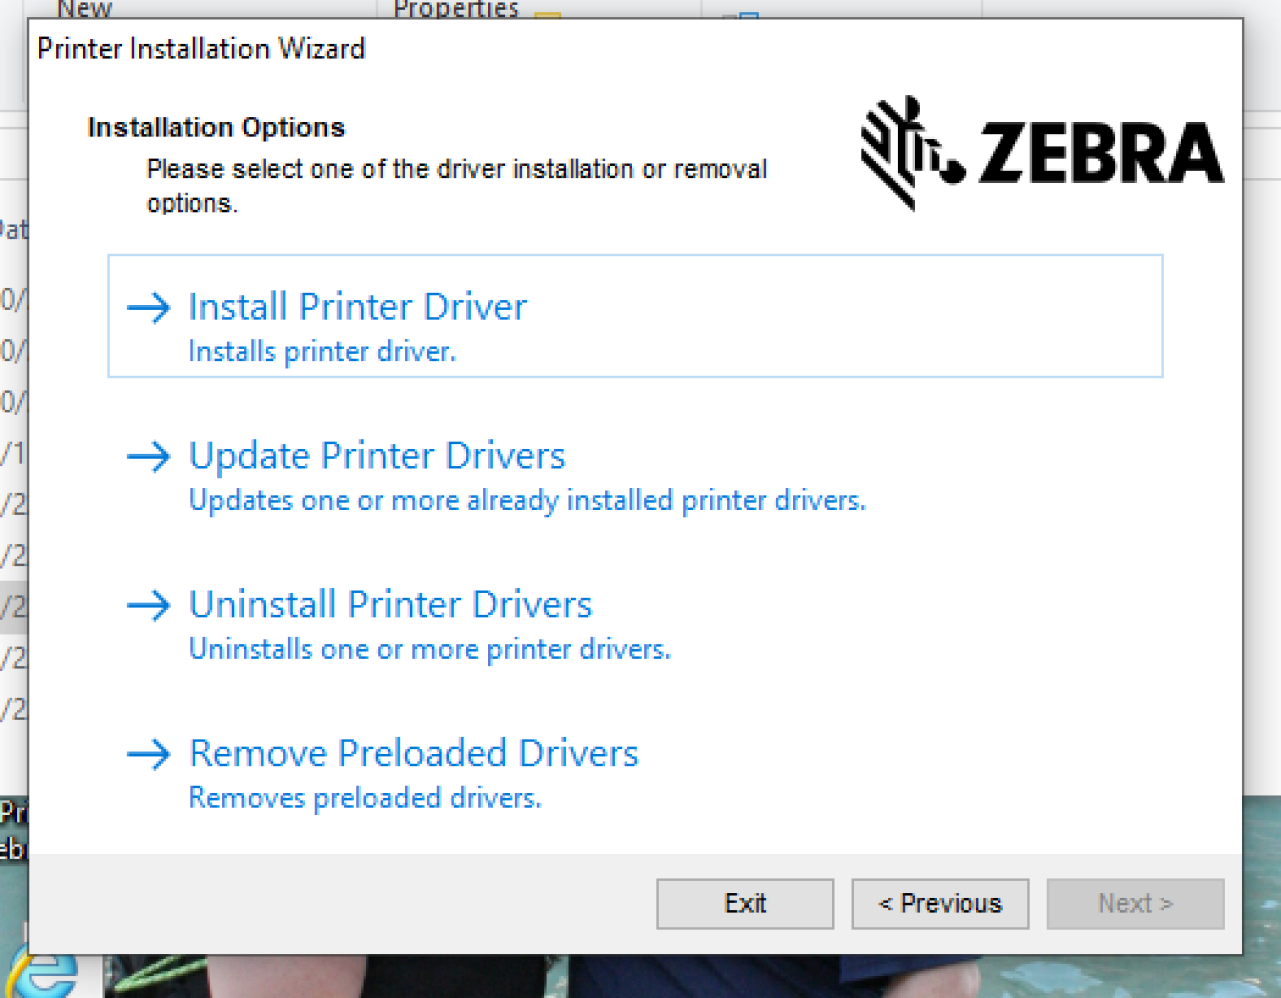 Install printer driver screen